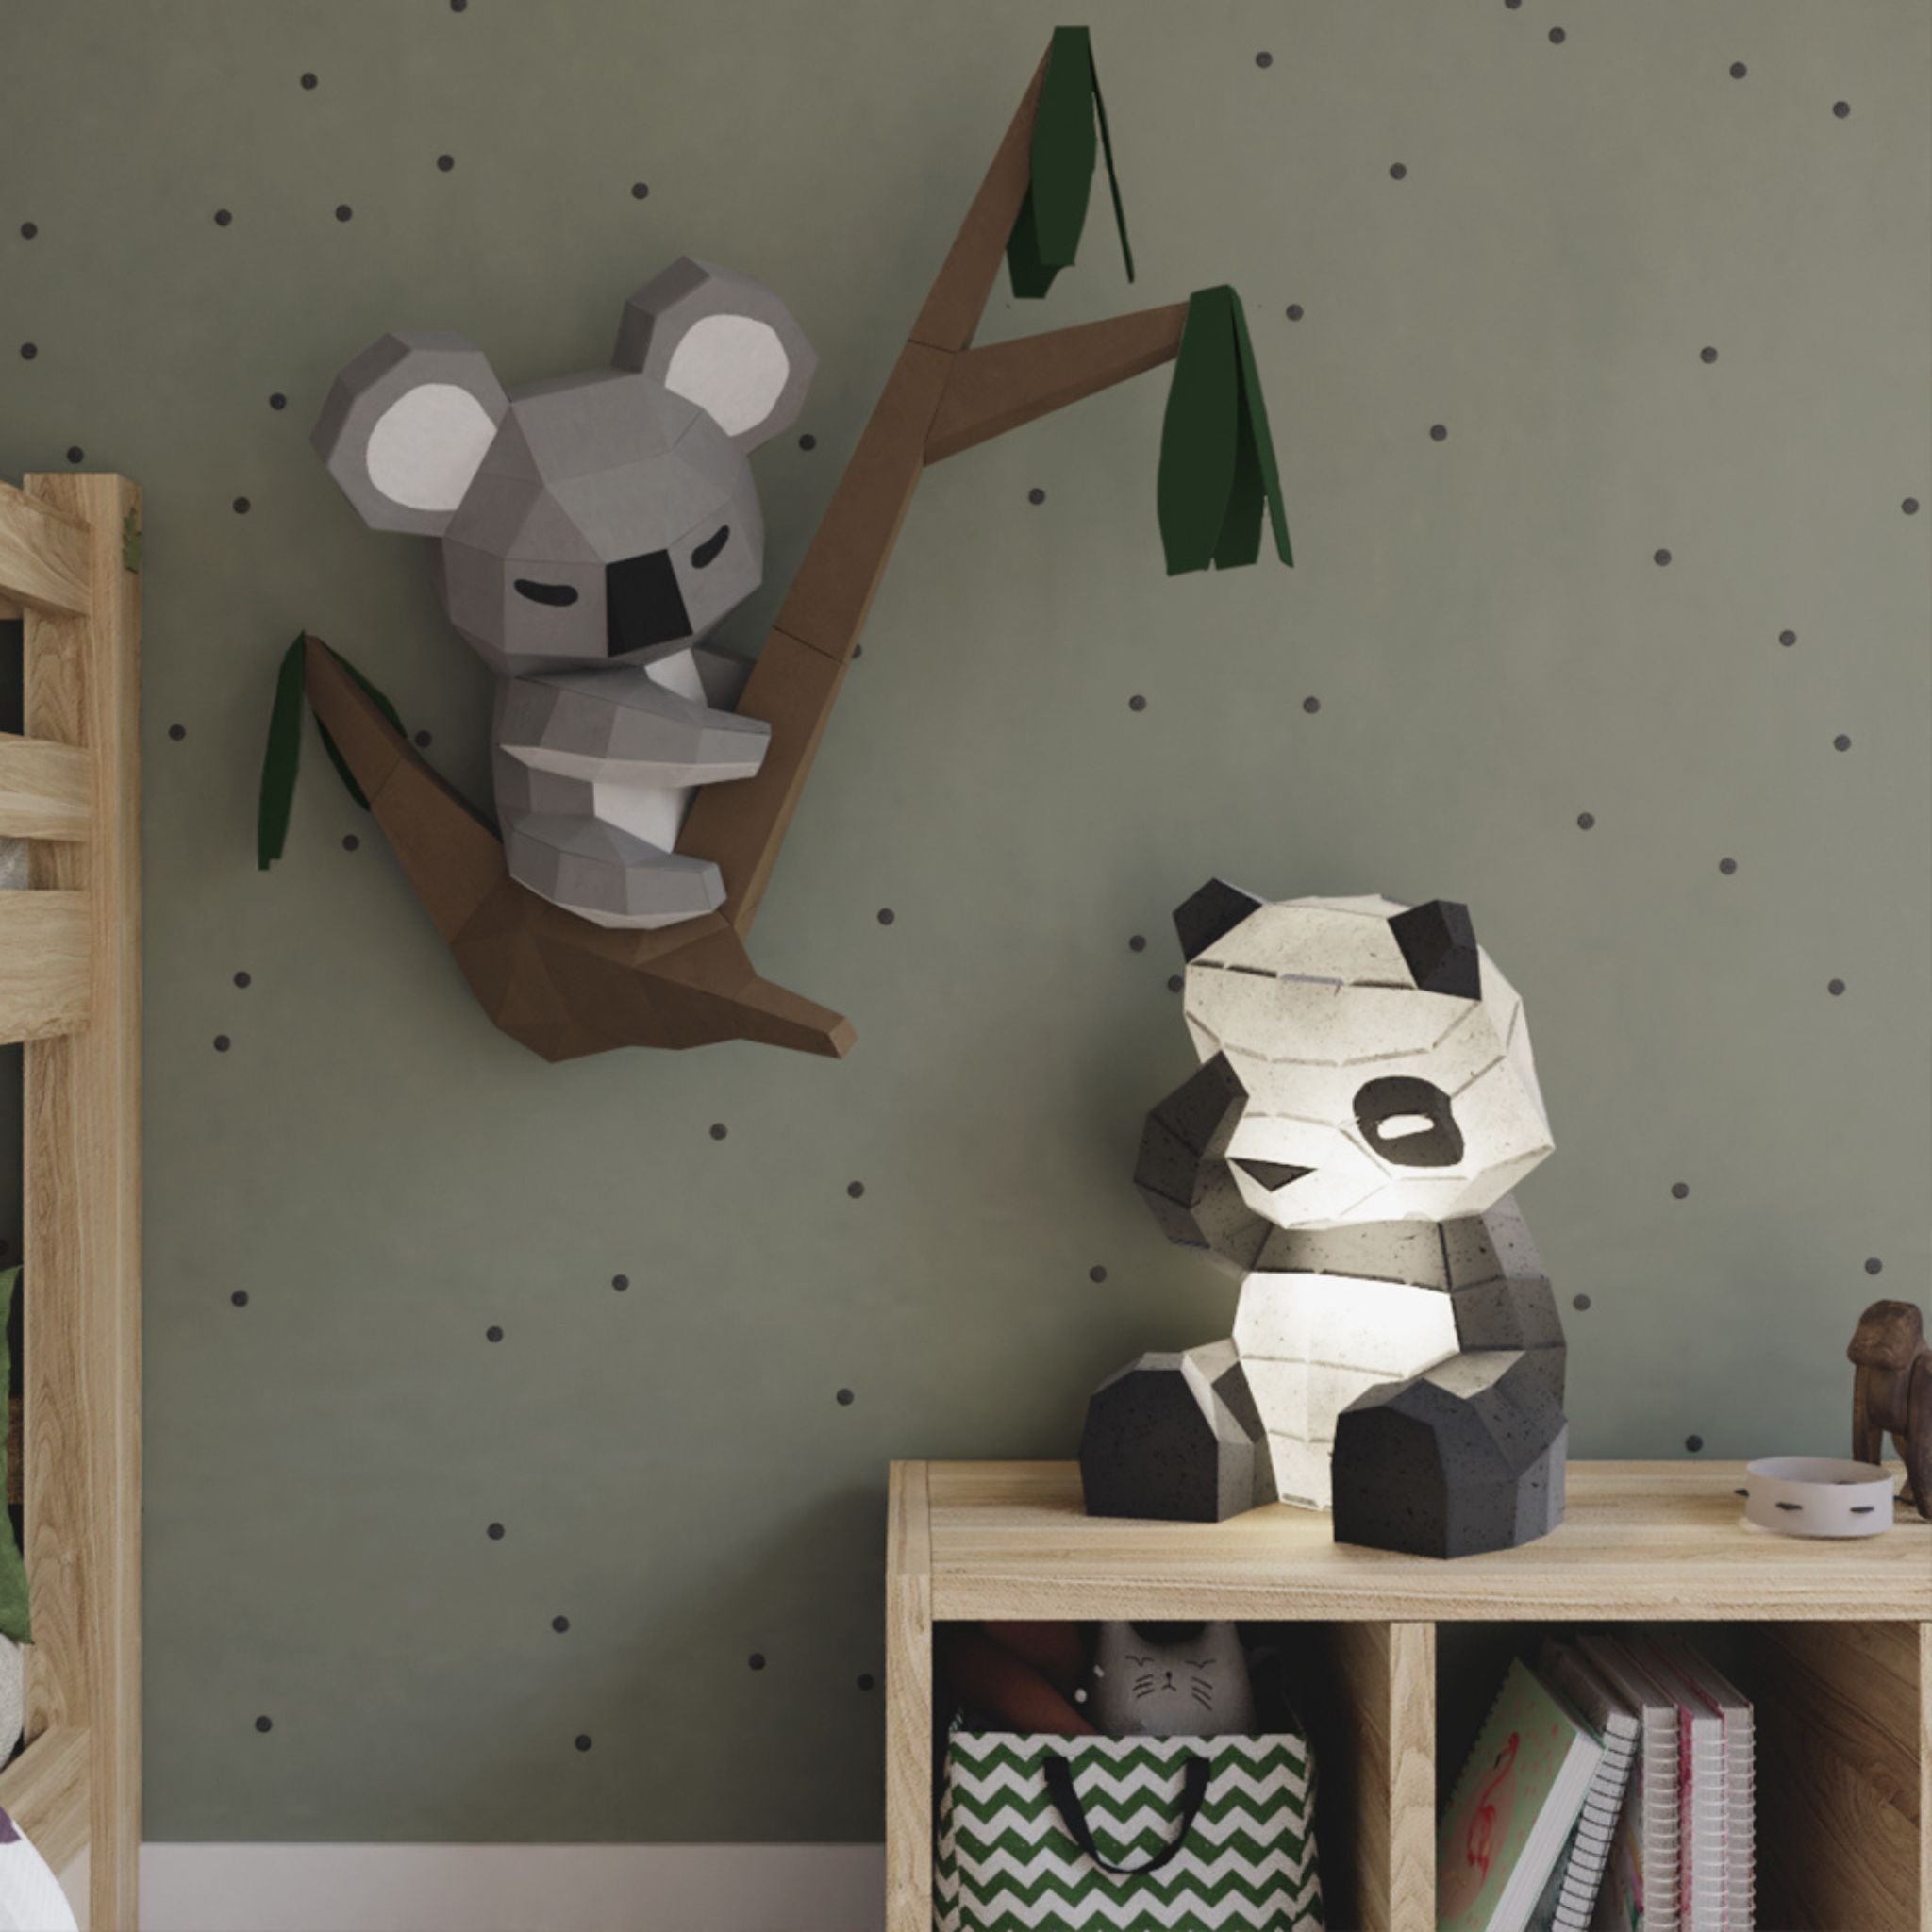 Décoration chambre enfant koala papercraft